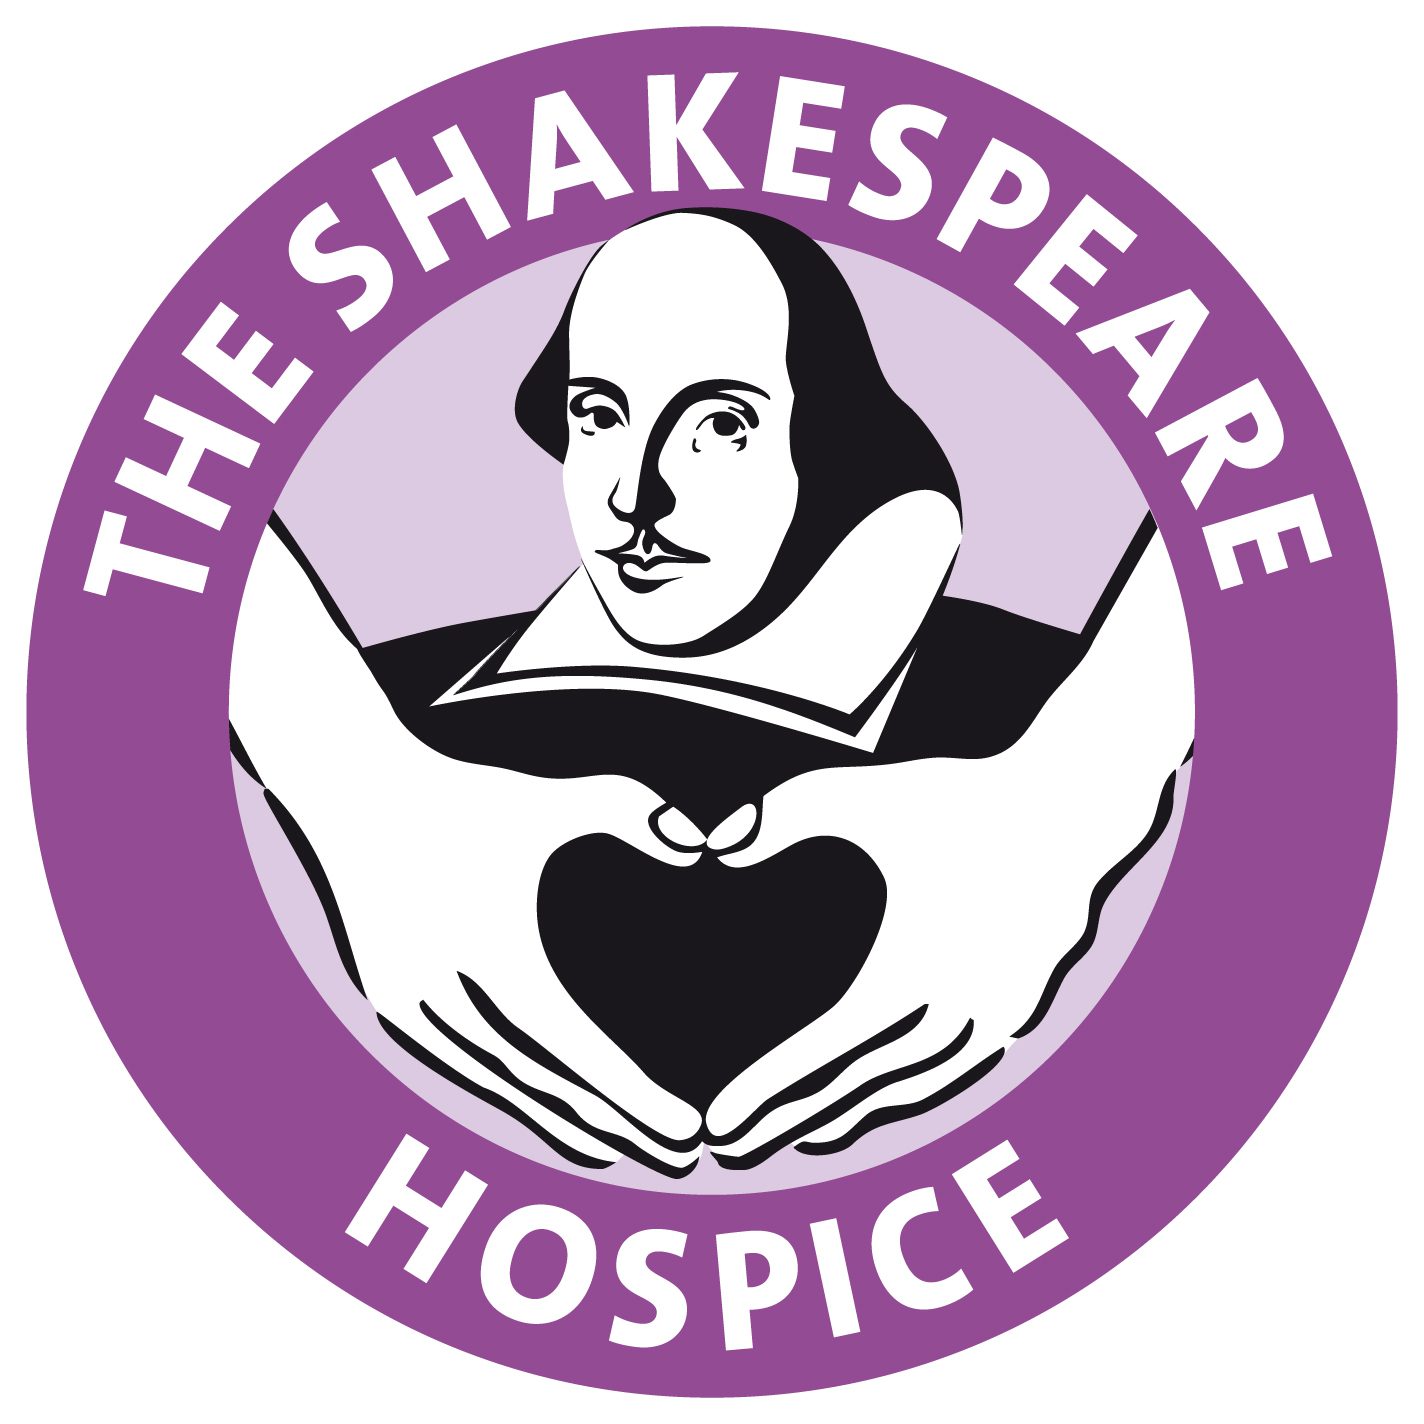 Shakespeare Hospice logo